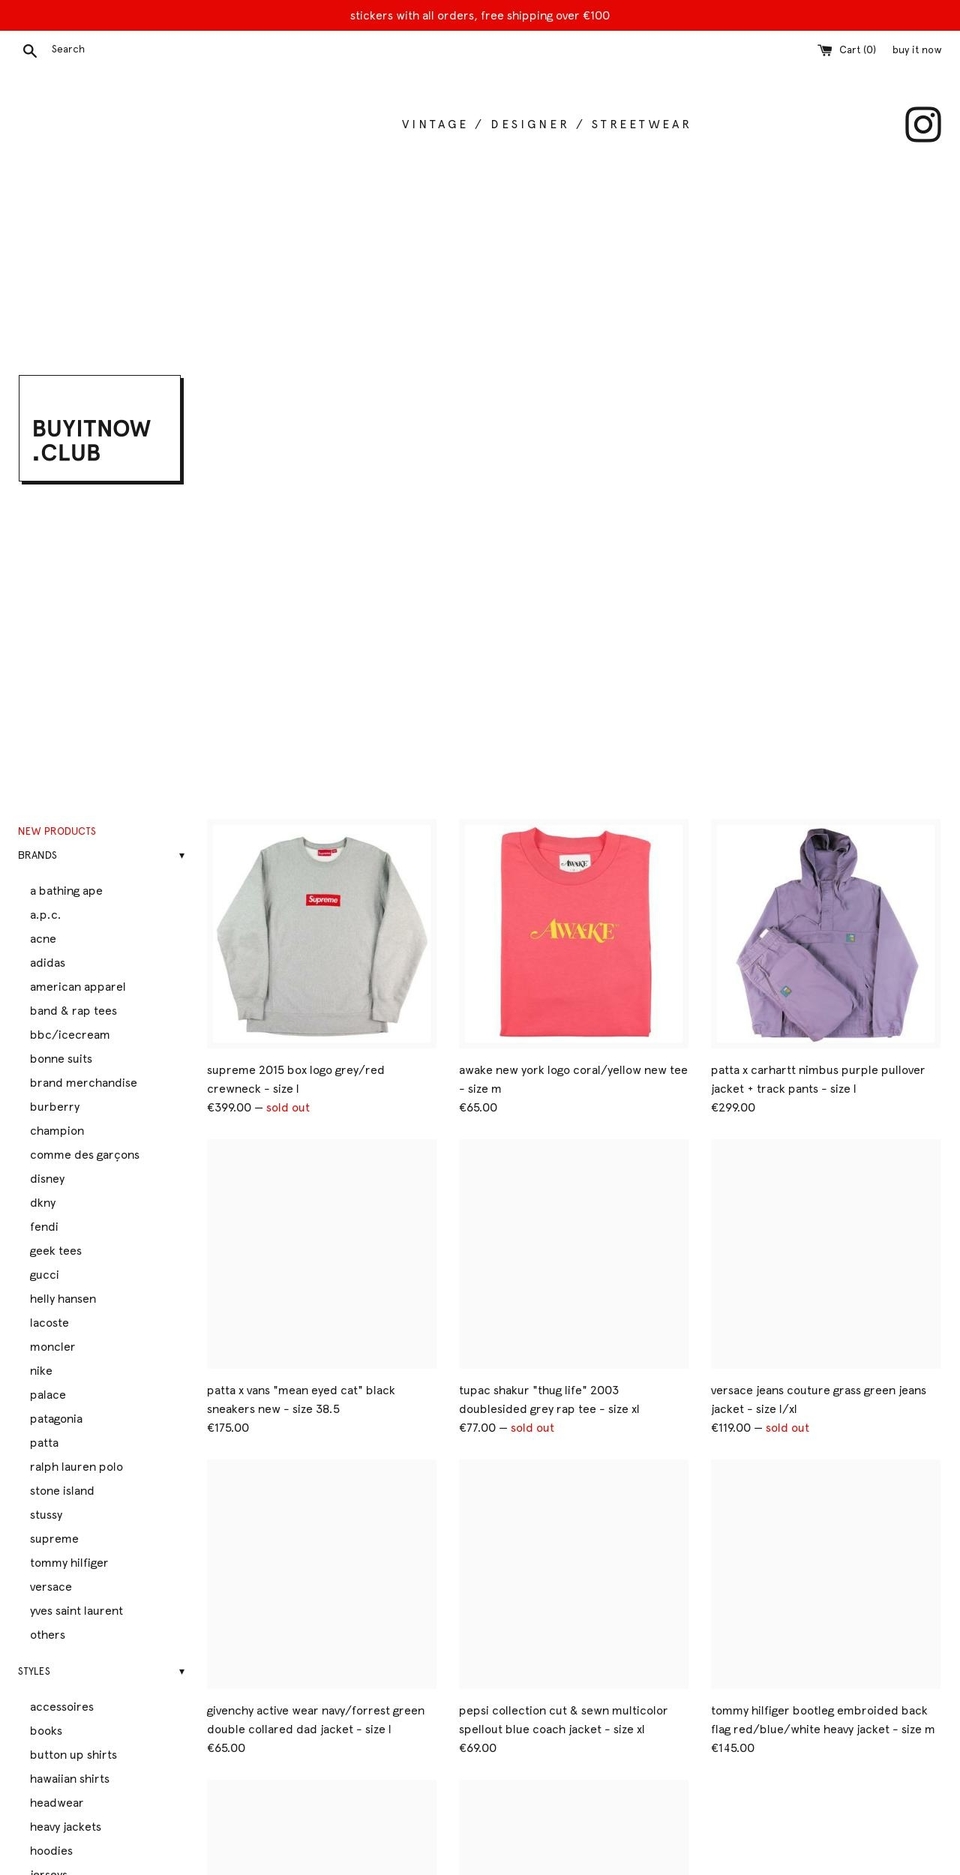 buyitnow.club shopify website screenshot